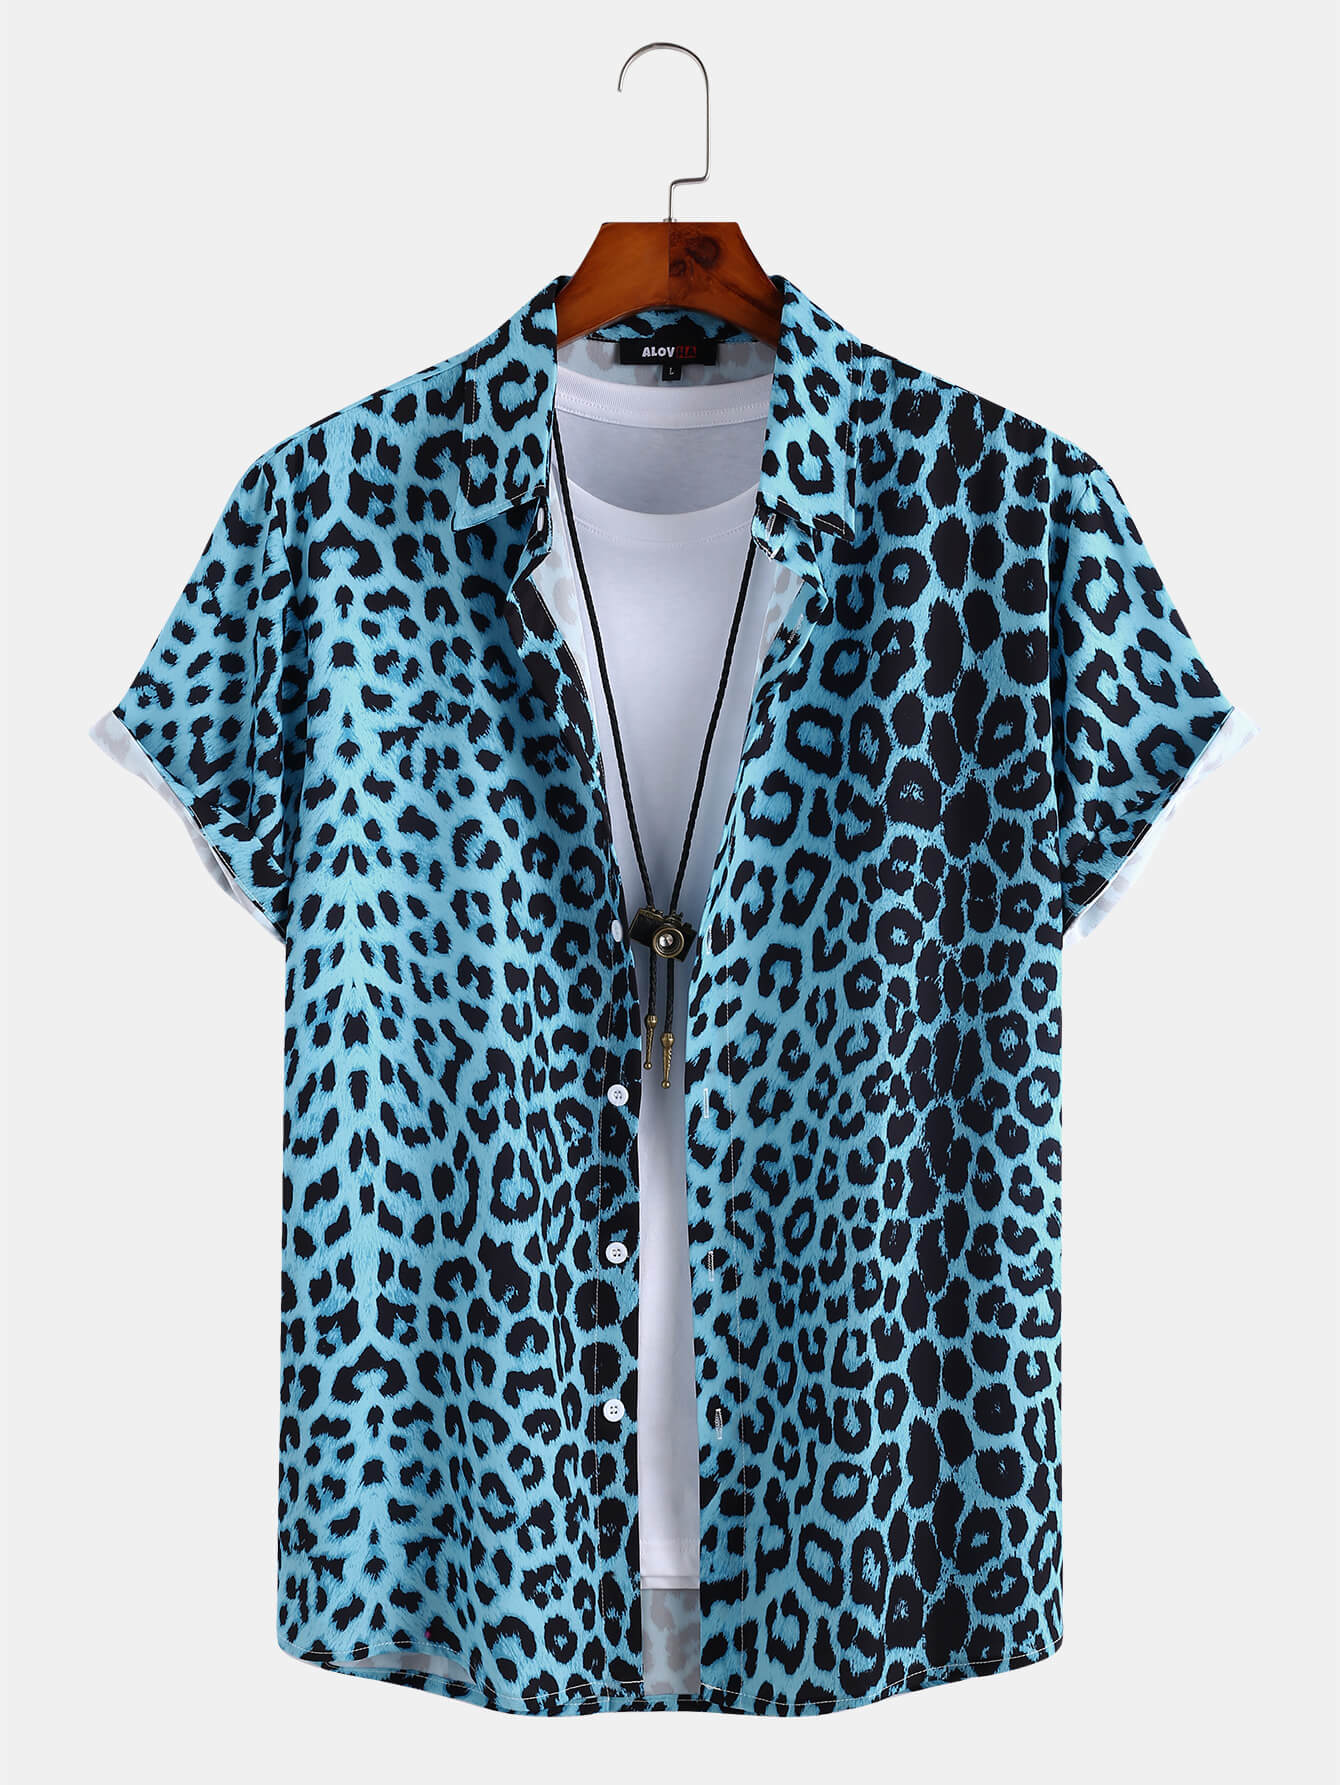 Mens Wild Leopard Print Short Sleeve Button Up Collared Shirt